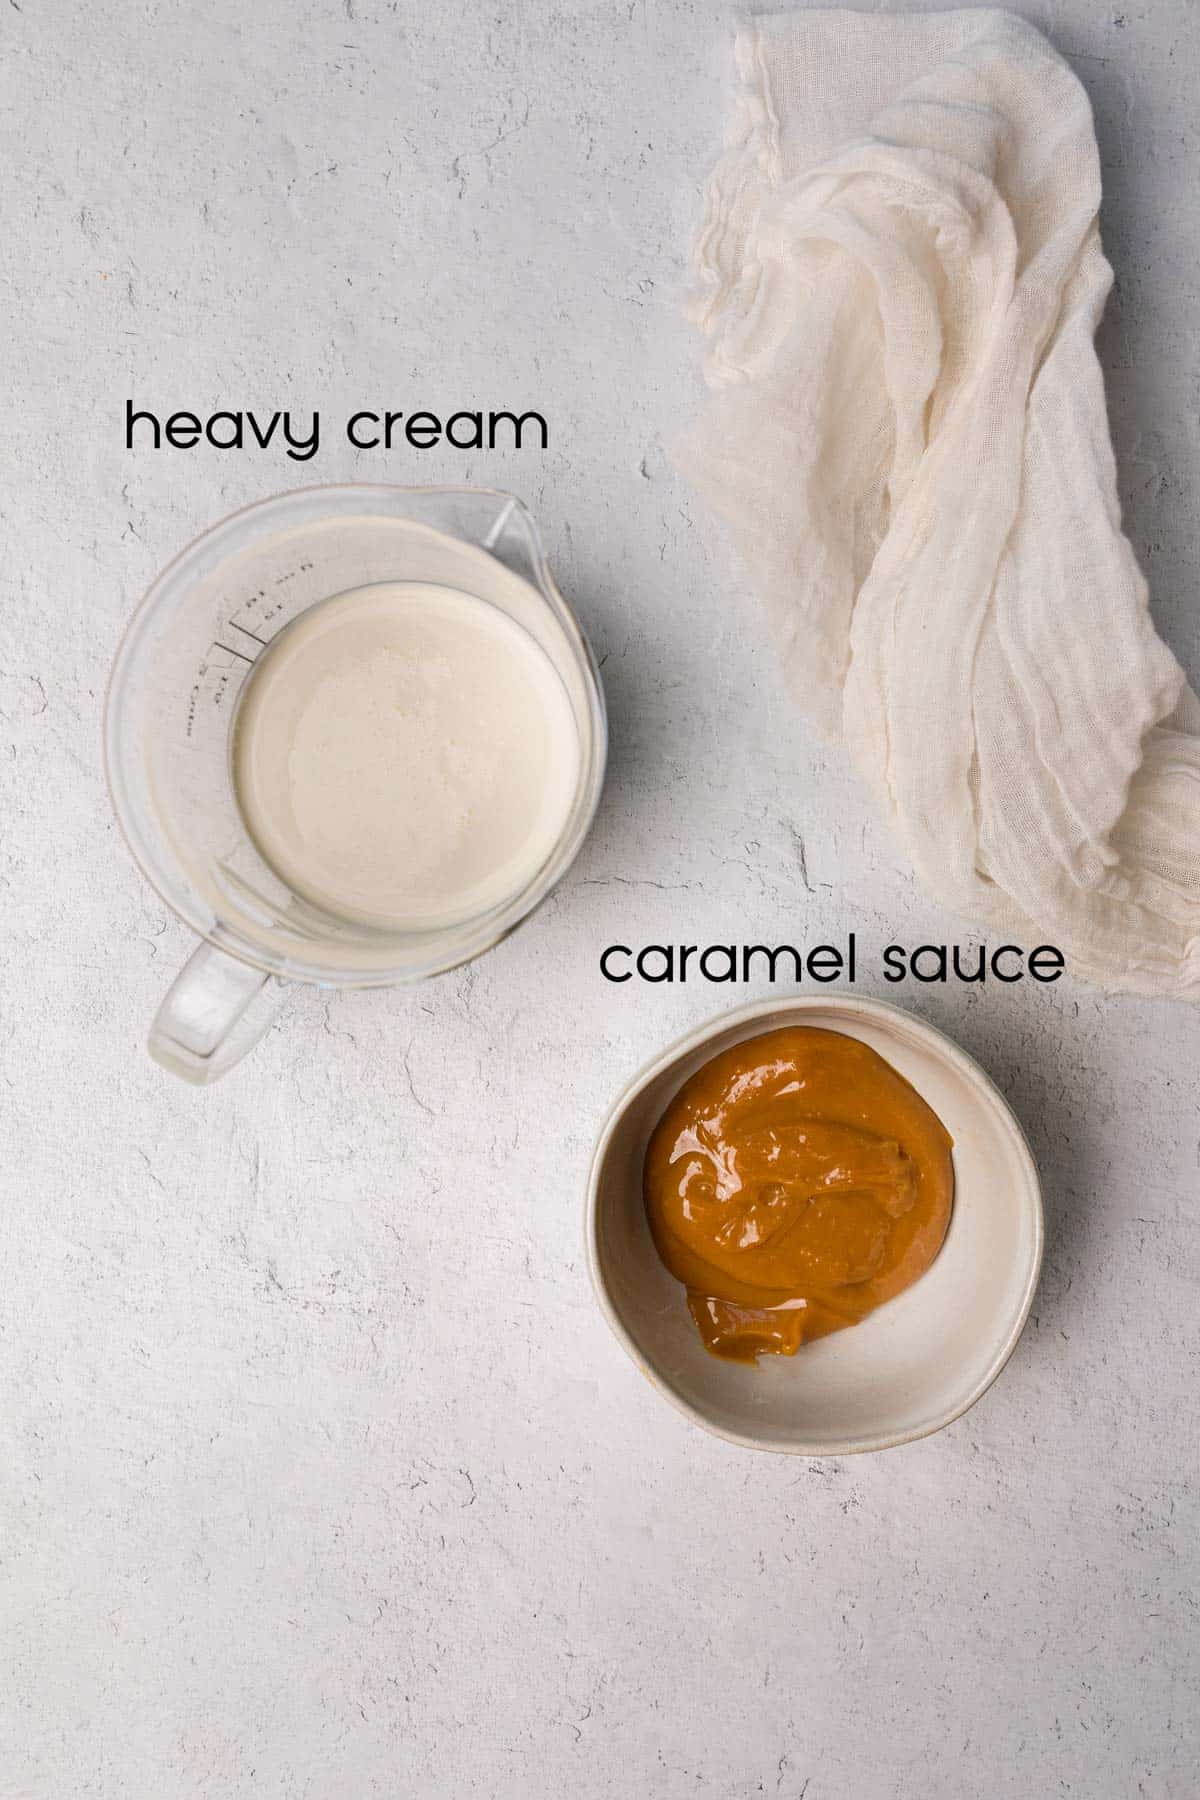 heavy cream and caramel sauce ingredients